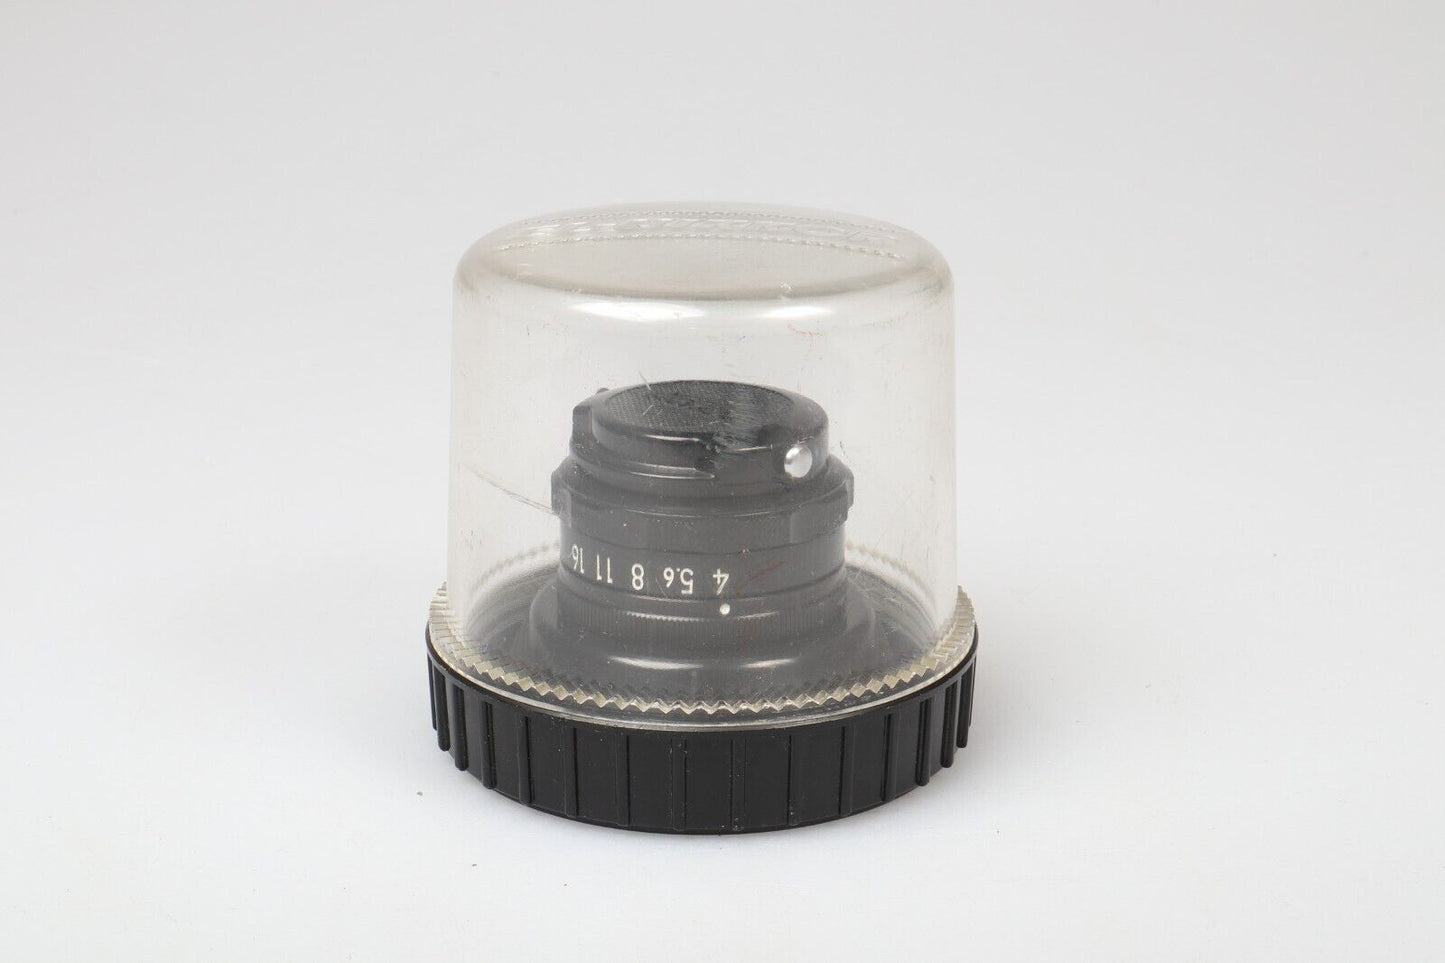 Nikon CP-2 | El Nikkor 229215 50mm f/4 Enlarger Lens